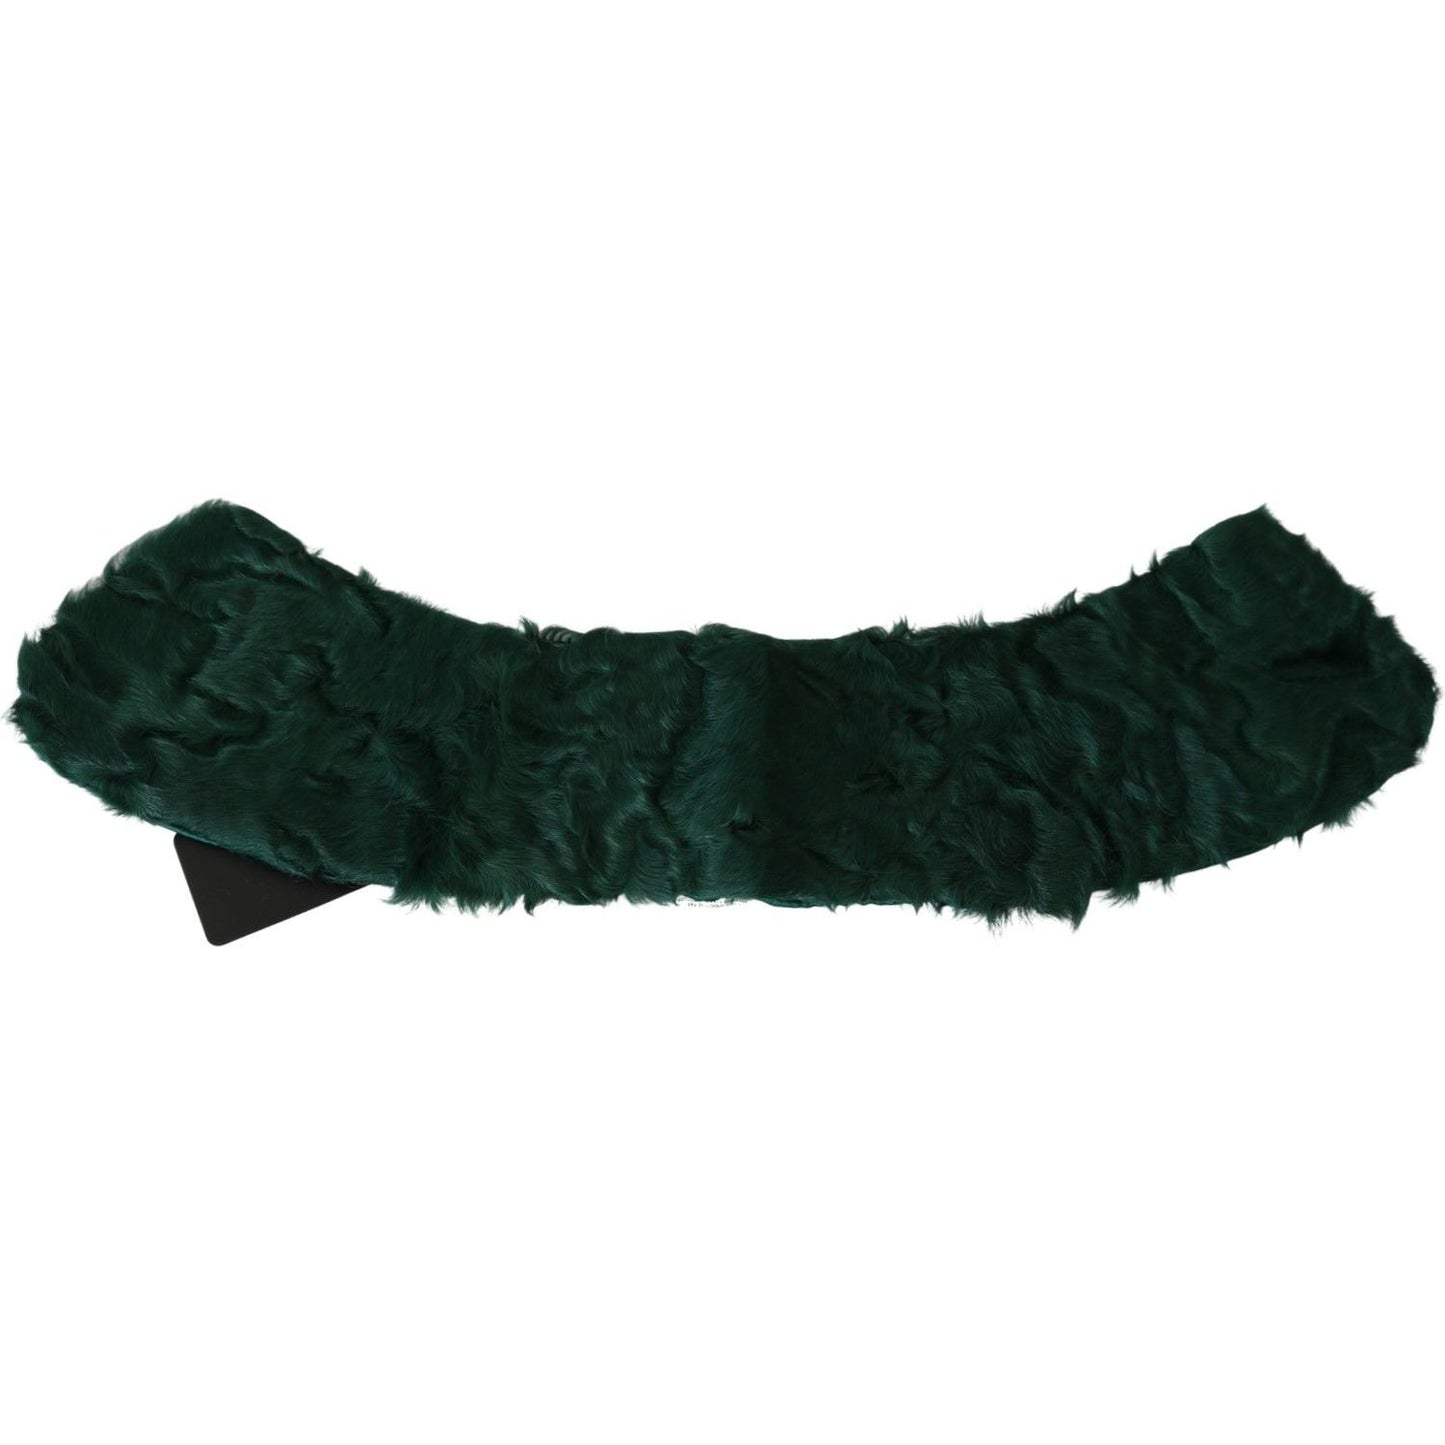 Dolce & Gabbana Elegant Lambskin Fur Scarf in Lush Green green-fur-shoulder-collar-wrap-lambskin-scarf IMG_3503-a11a1d7a-792.jpg